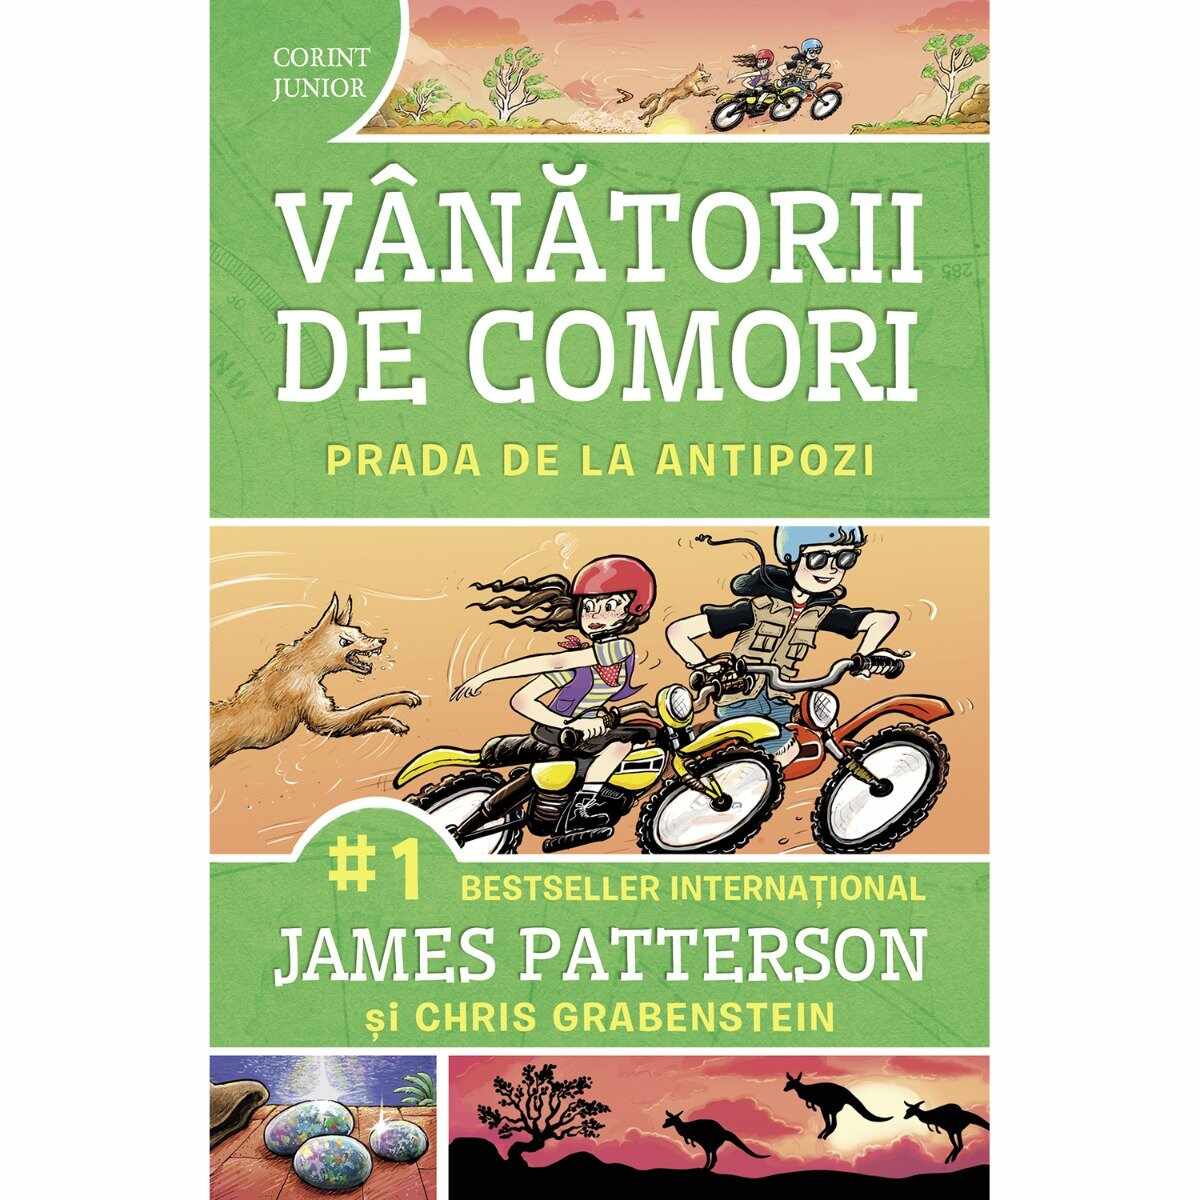 Carte Editura Corint, Vanatorii de comori vol.7 Prada de la antipozi, James Patterson, Chris Grabenstein